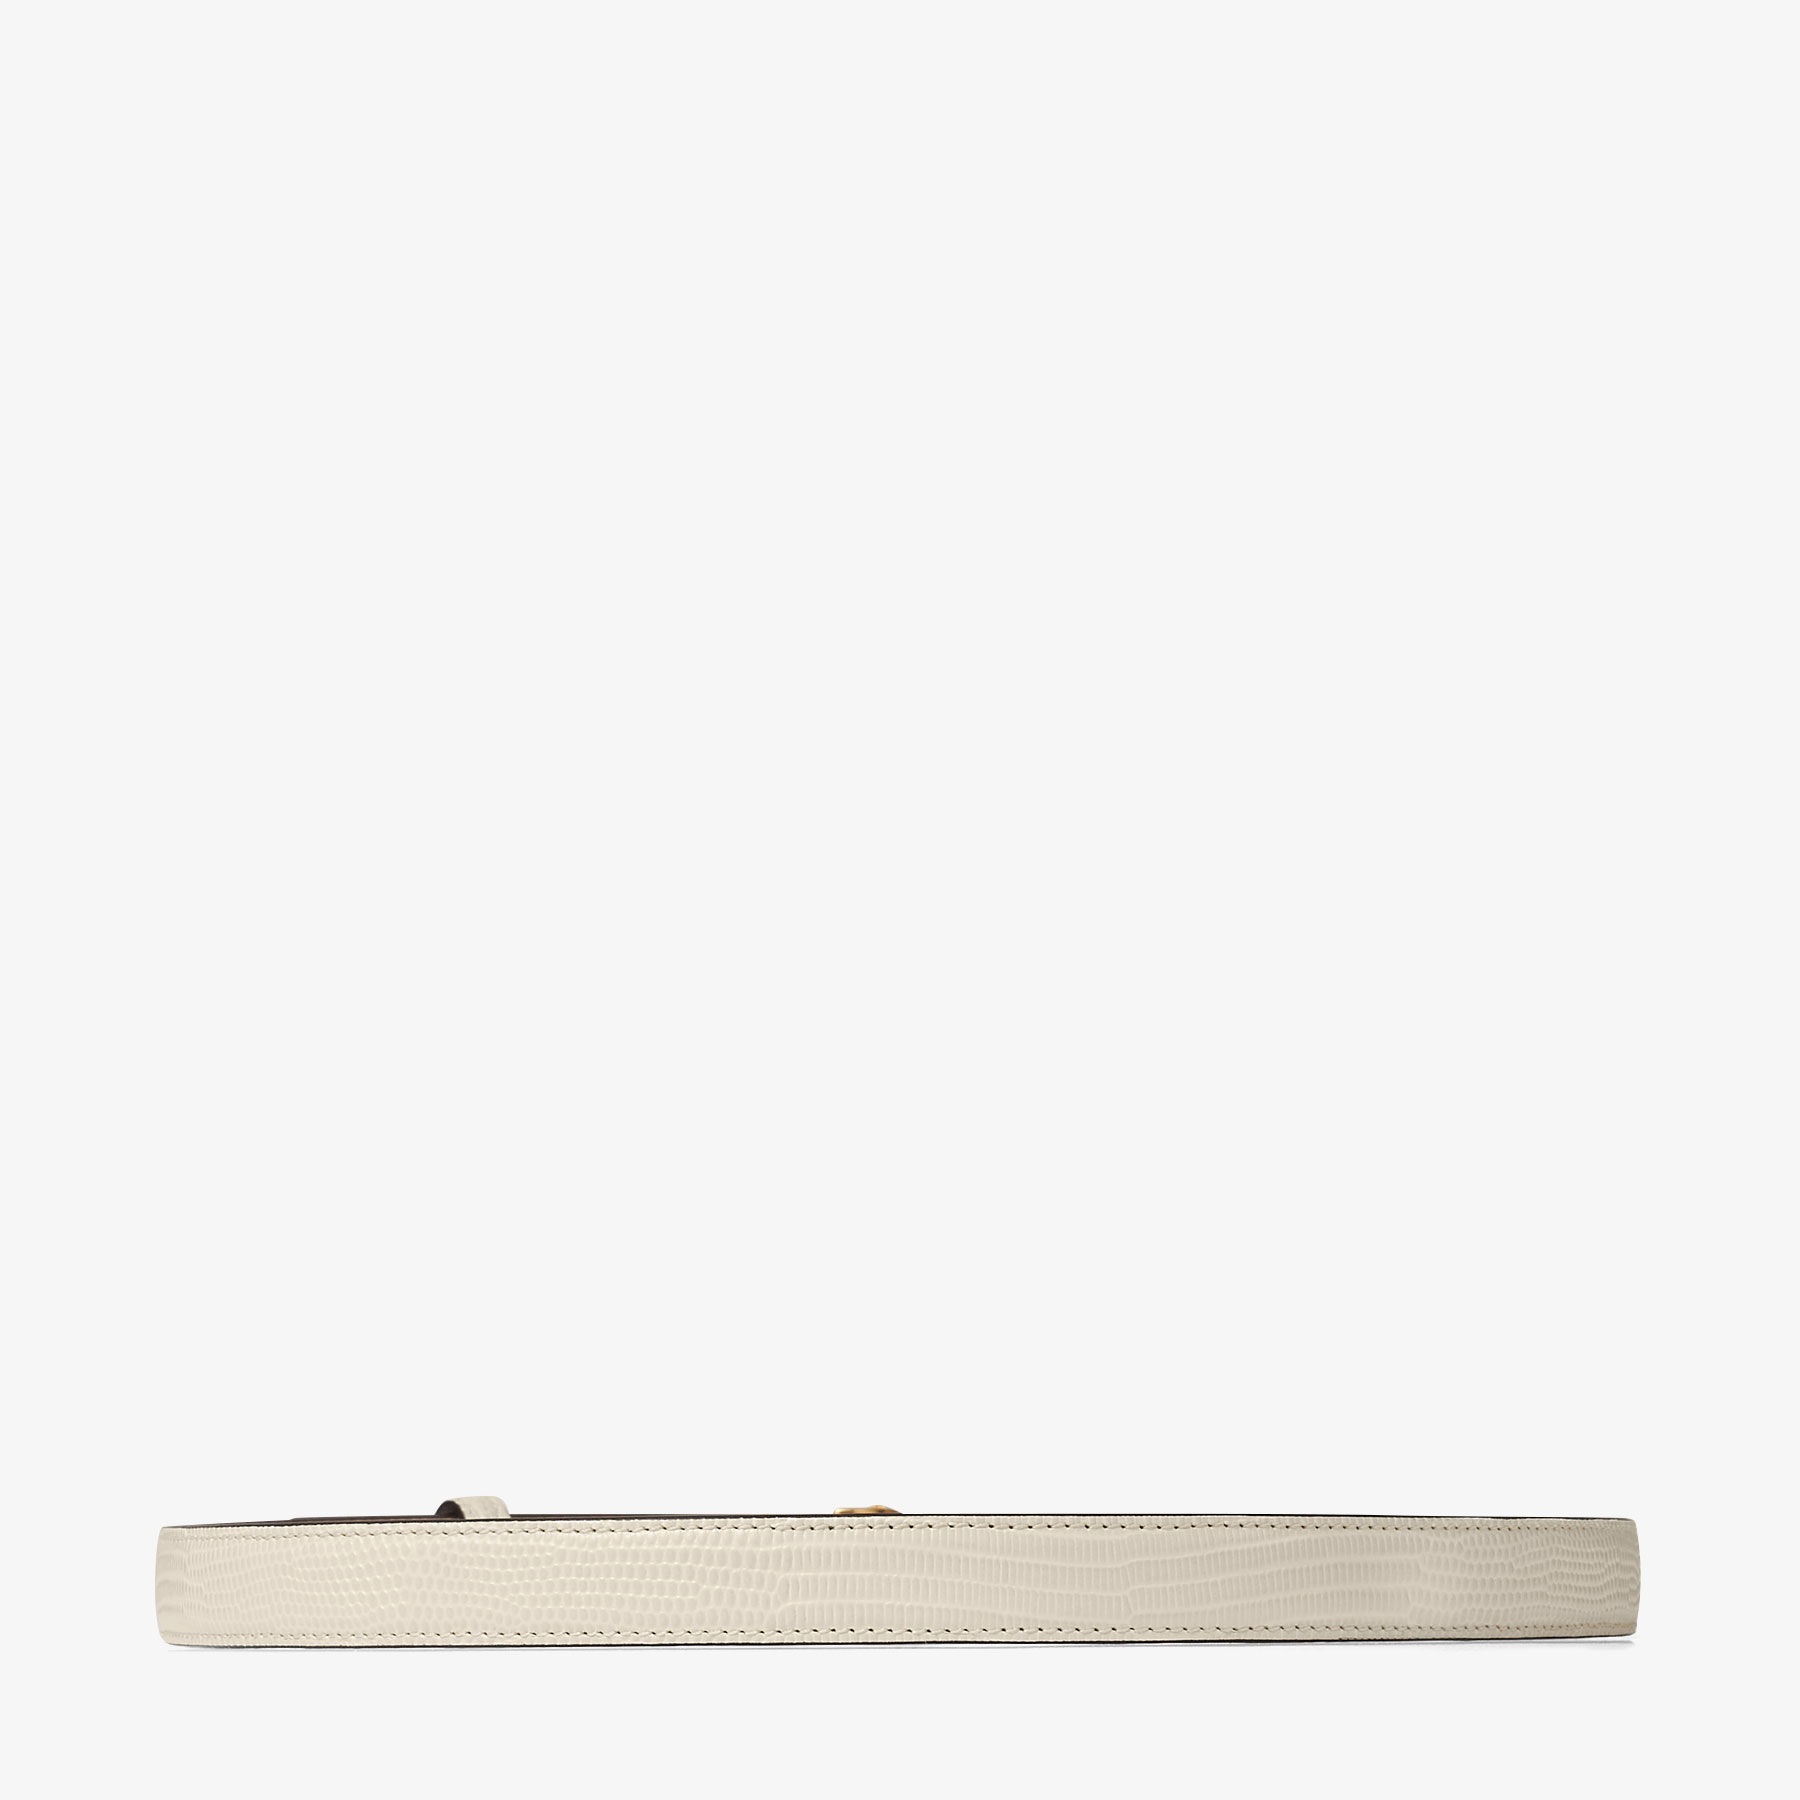 Diamond Clasp Belt
Bamboo Lizard Print Belt - 5